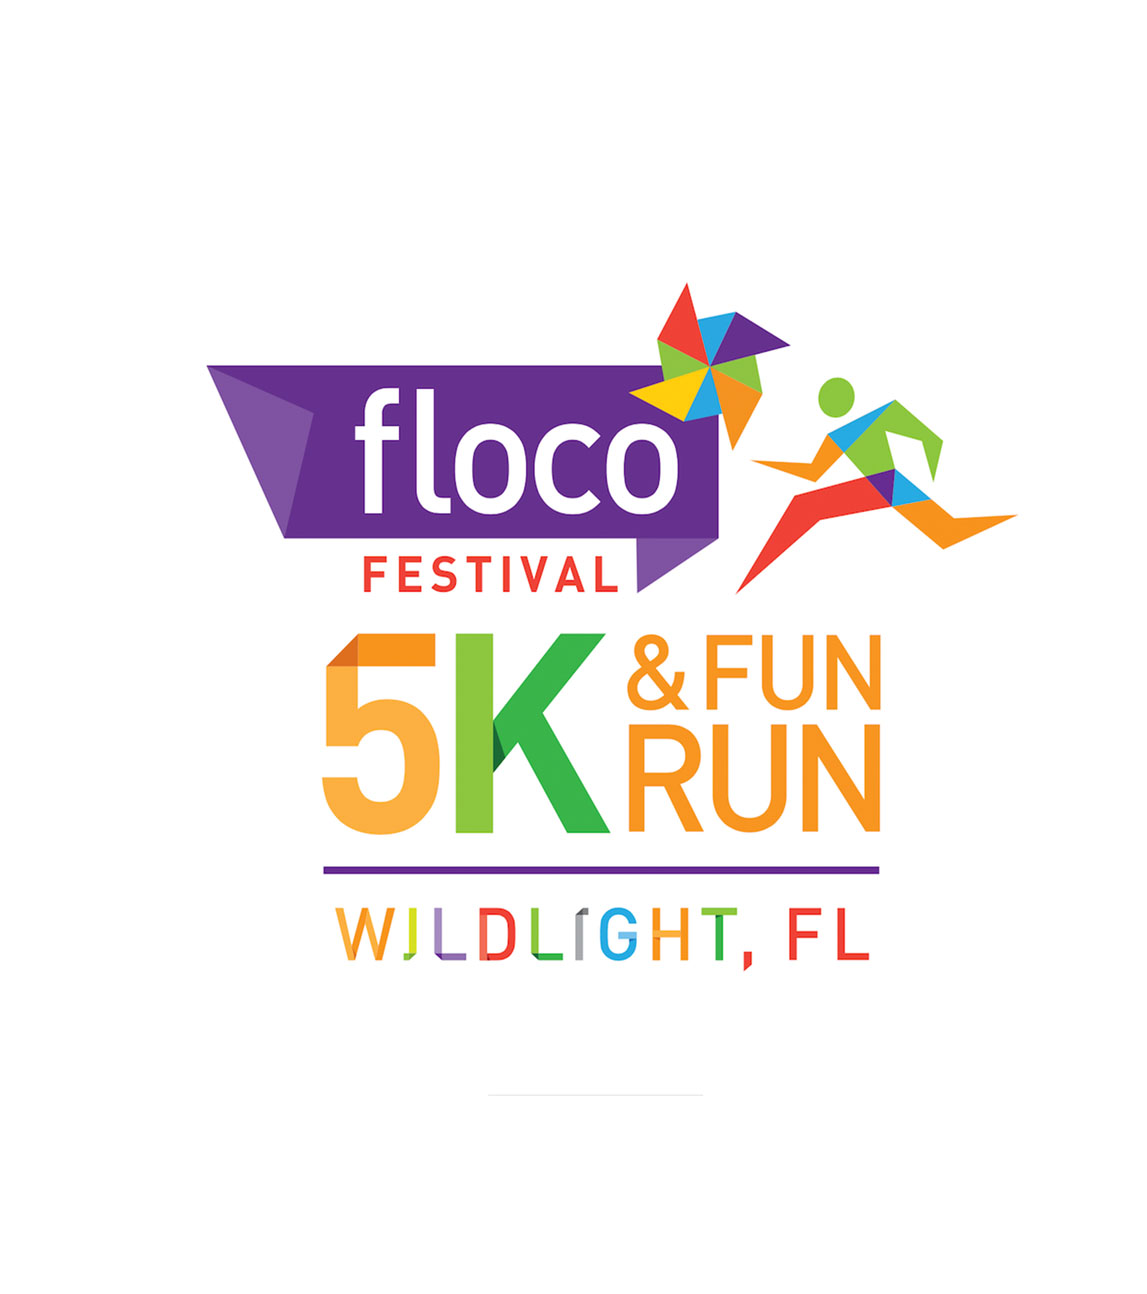 The logo for the floco festival 5k and fun run wildlight, florida.